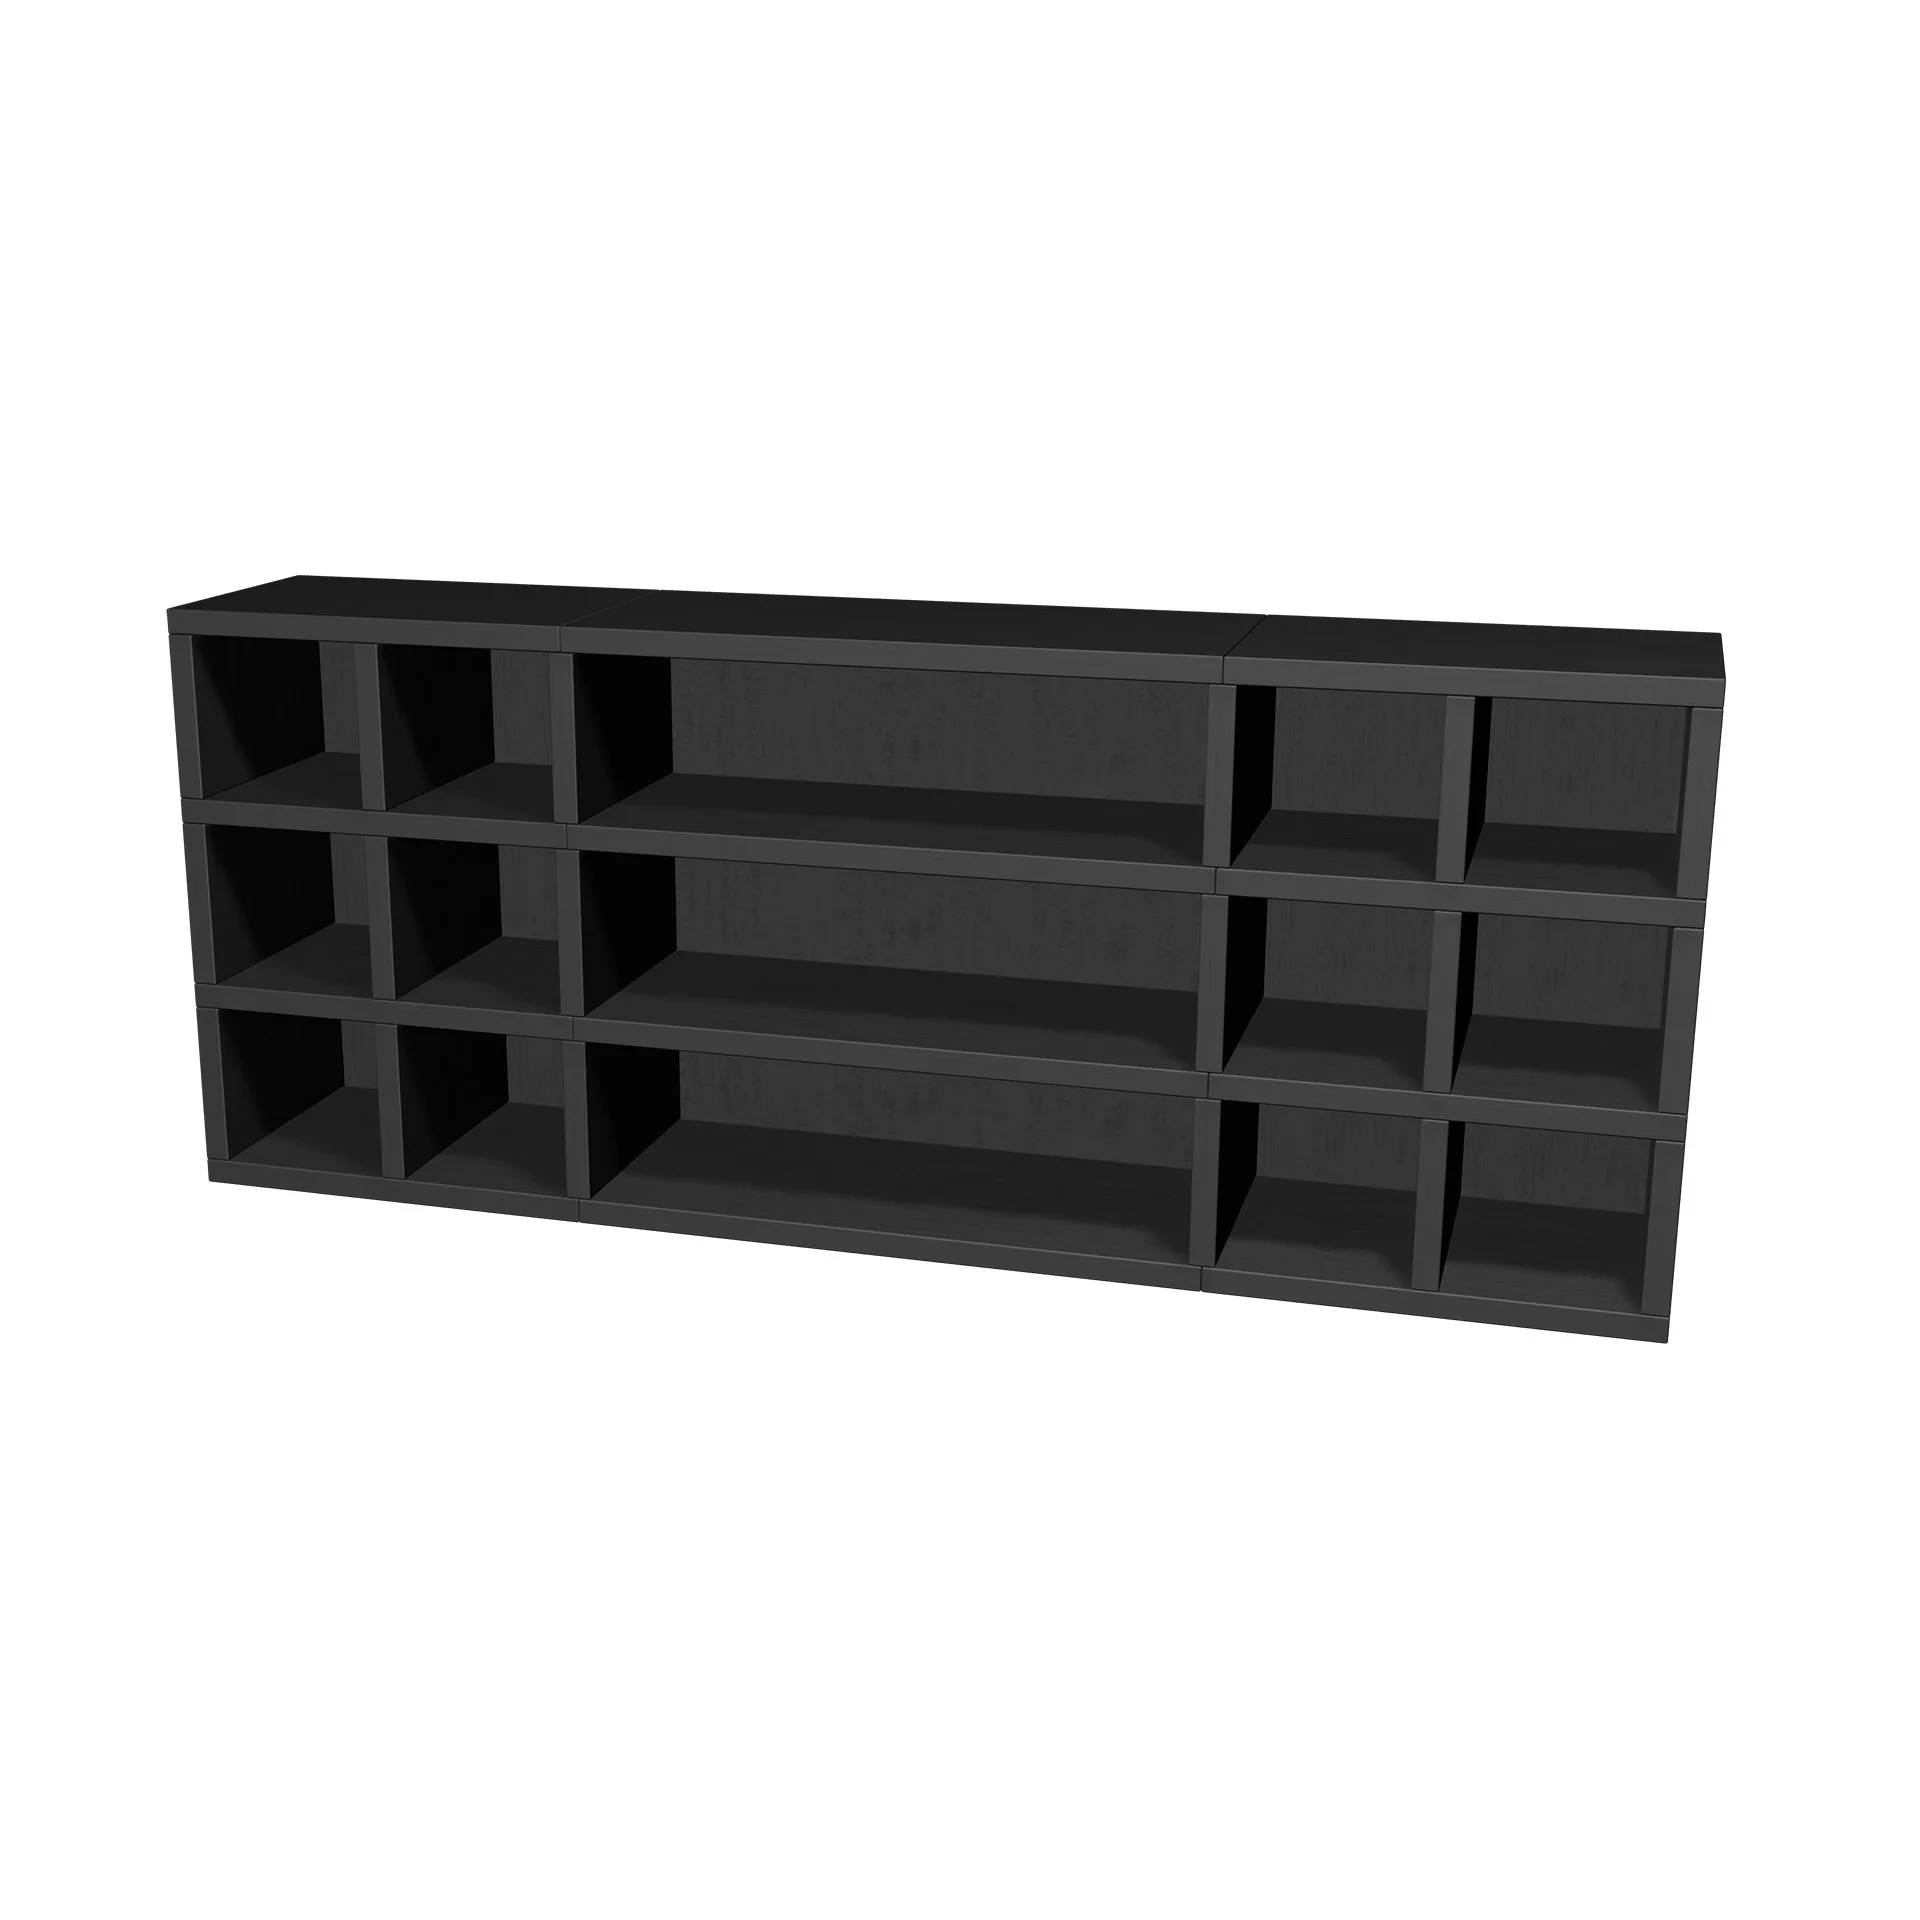 TSFC036 en panel mueble roble negro